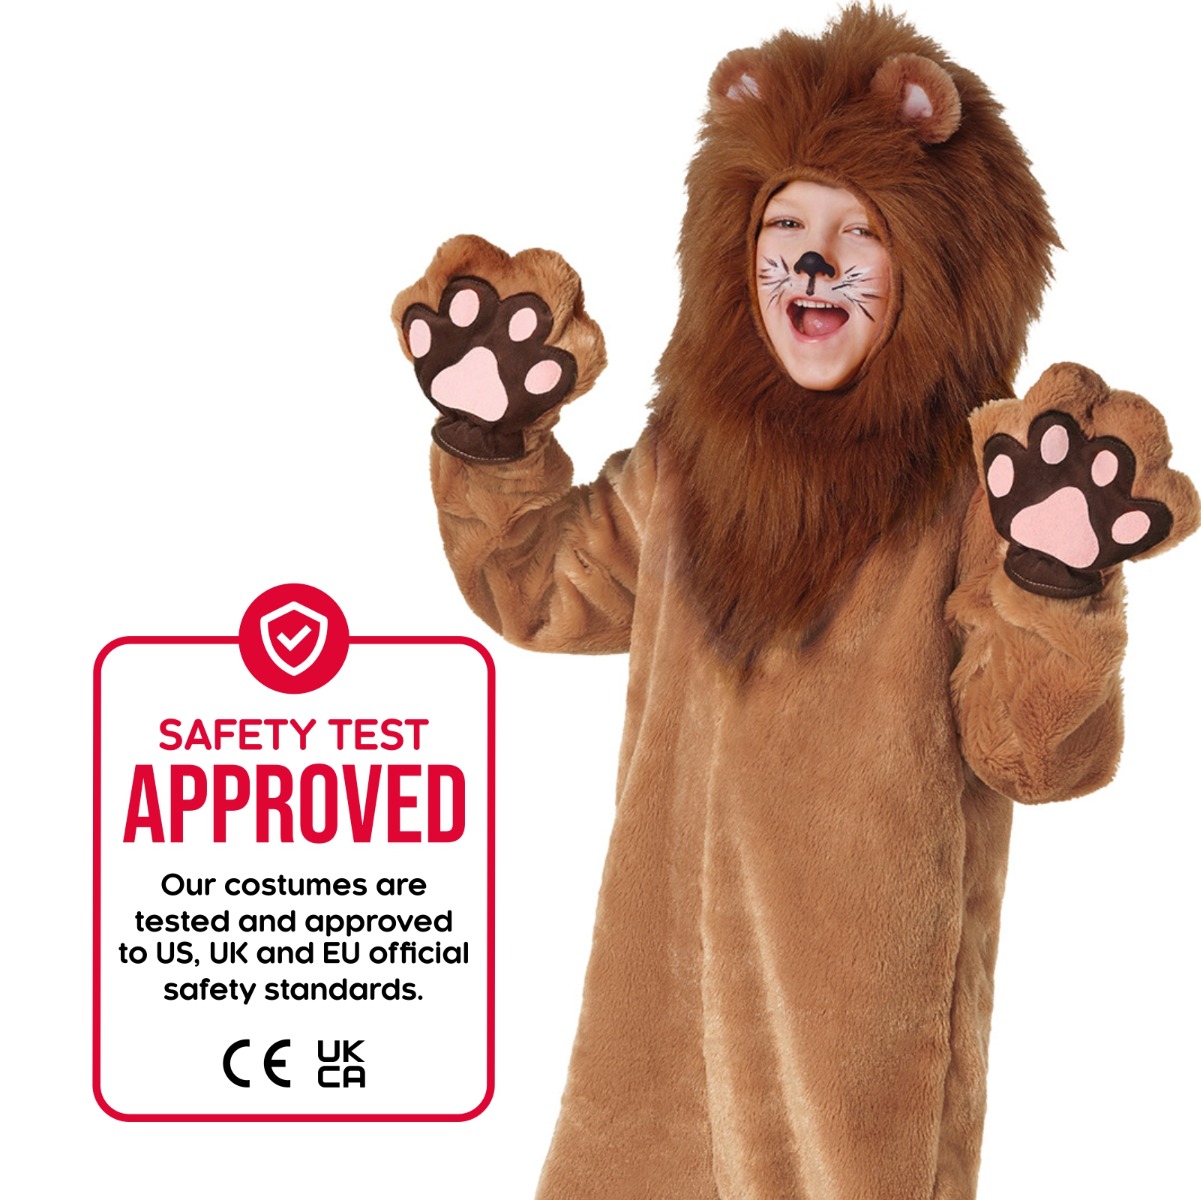 Kids Lion Deluxe Costume